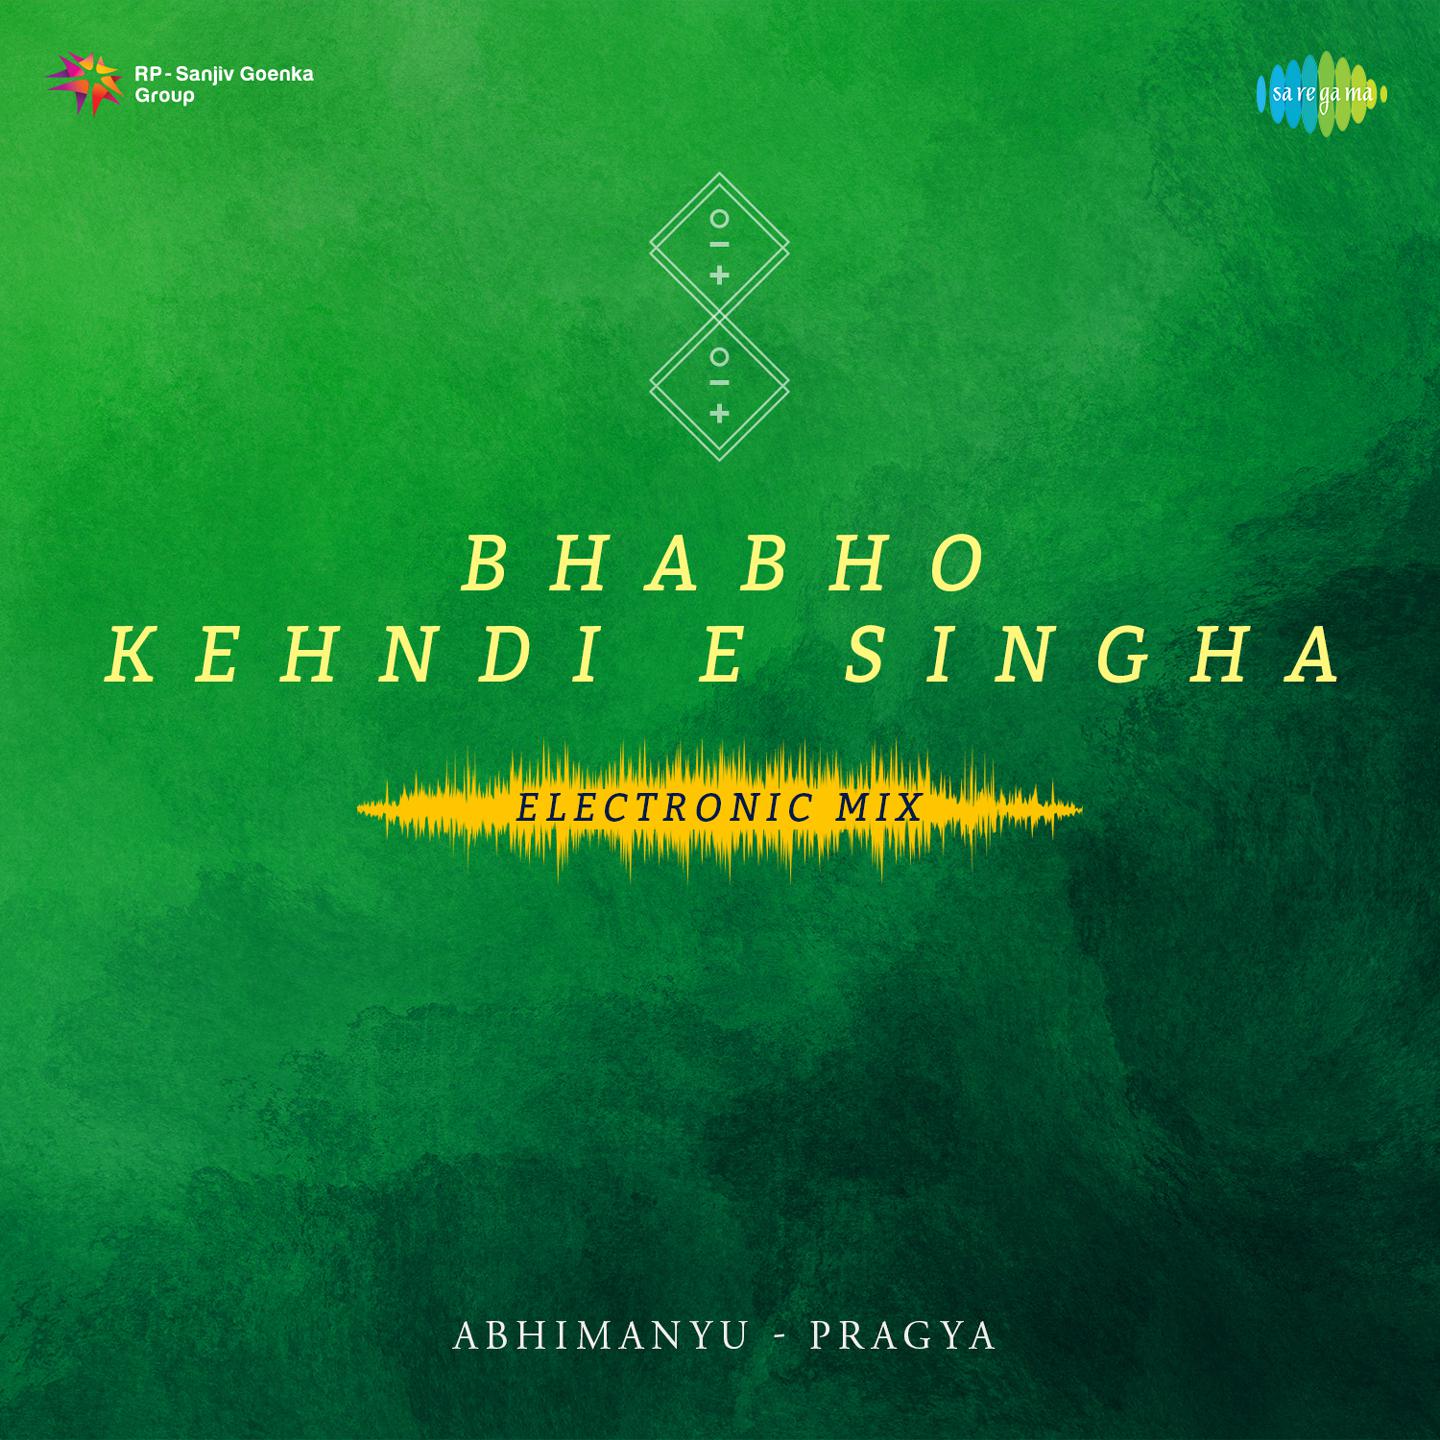 Surinder Kaur - Bhabho Kehndi E Singha Electronic Mix